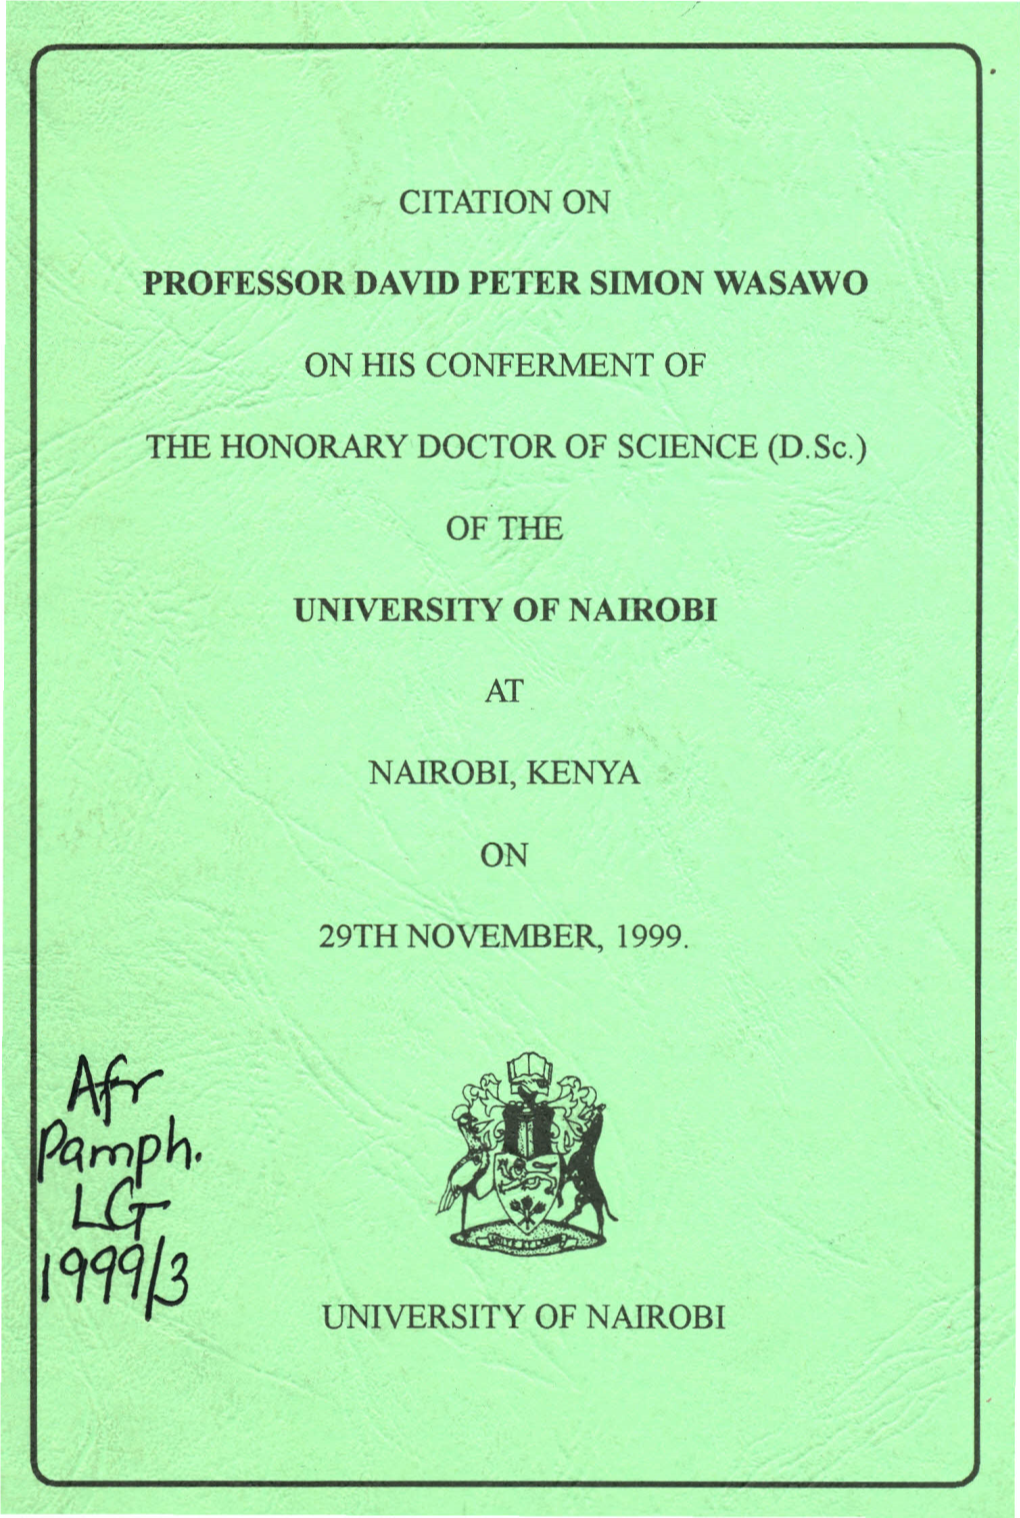 Professor David Peter Simon Wasawo